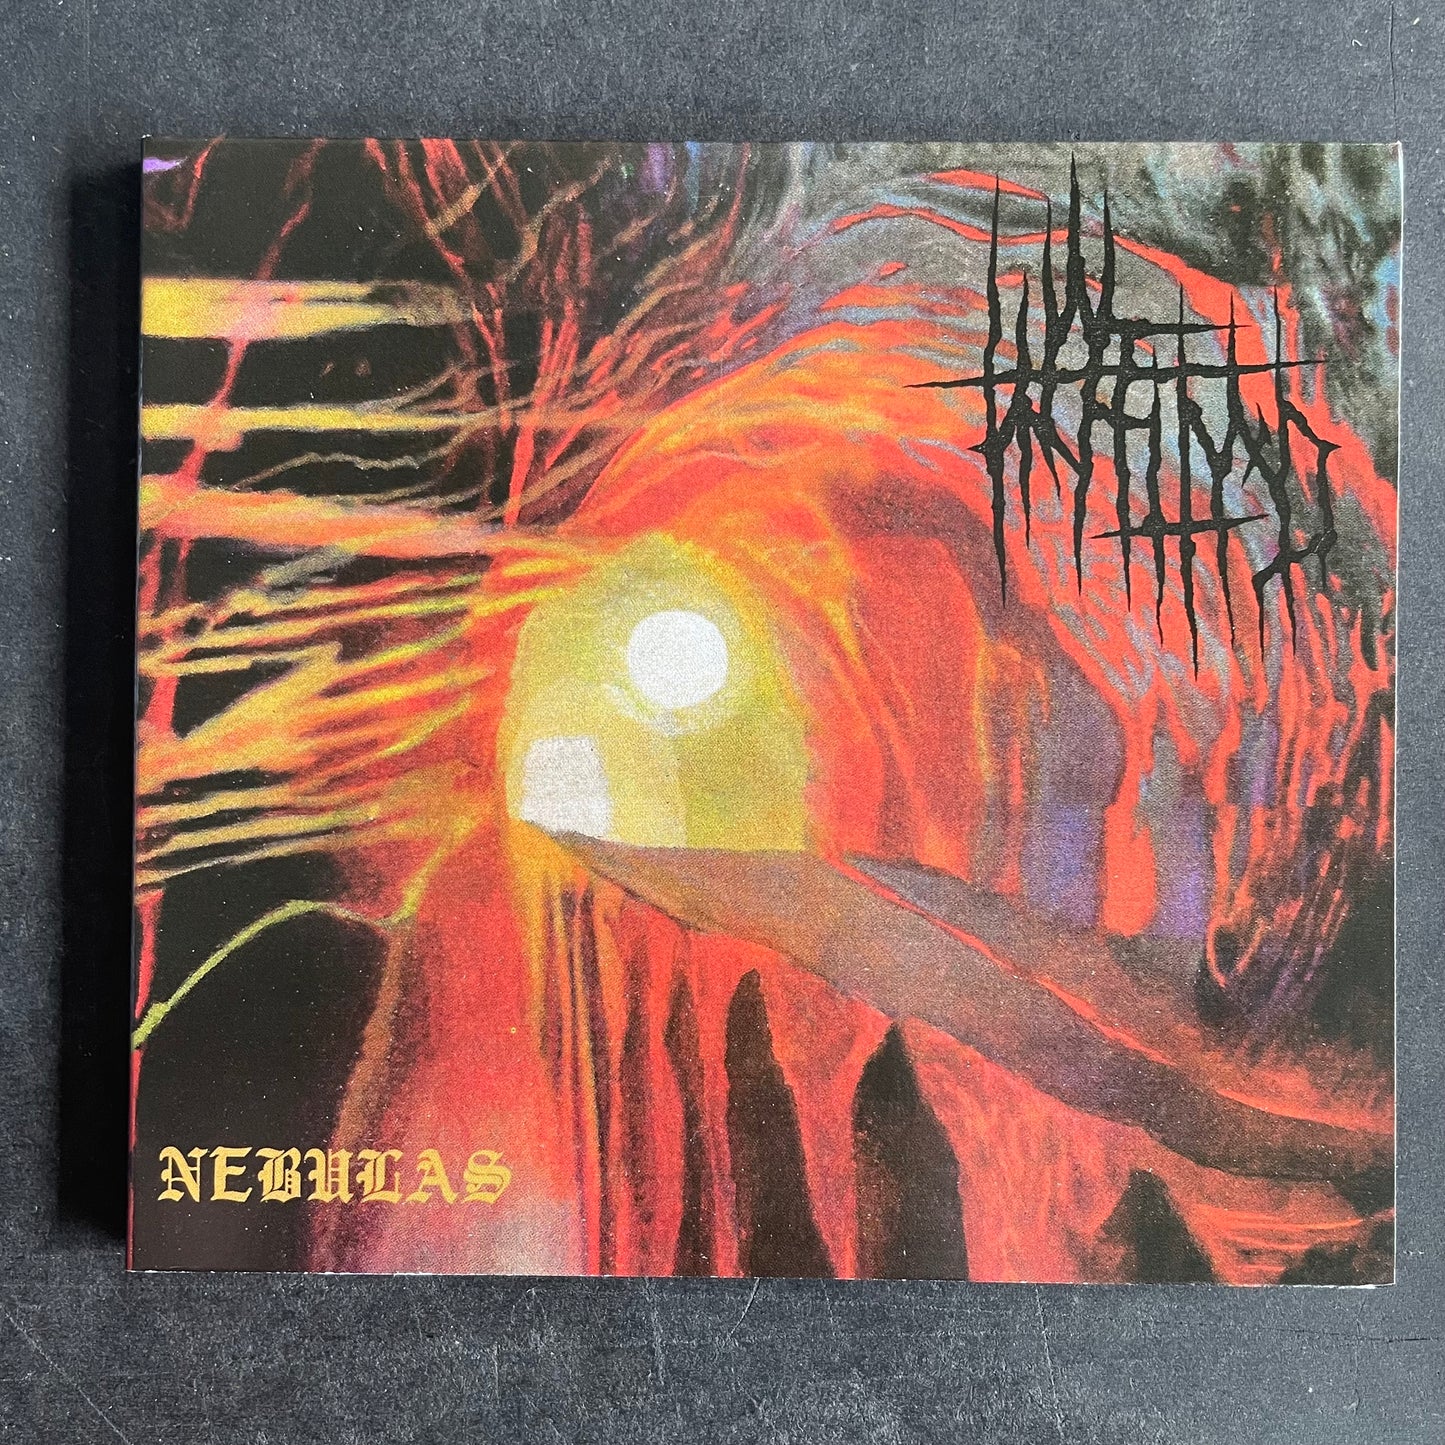 Wolfland - Nebulas CD